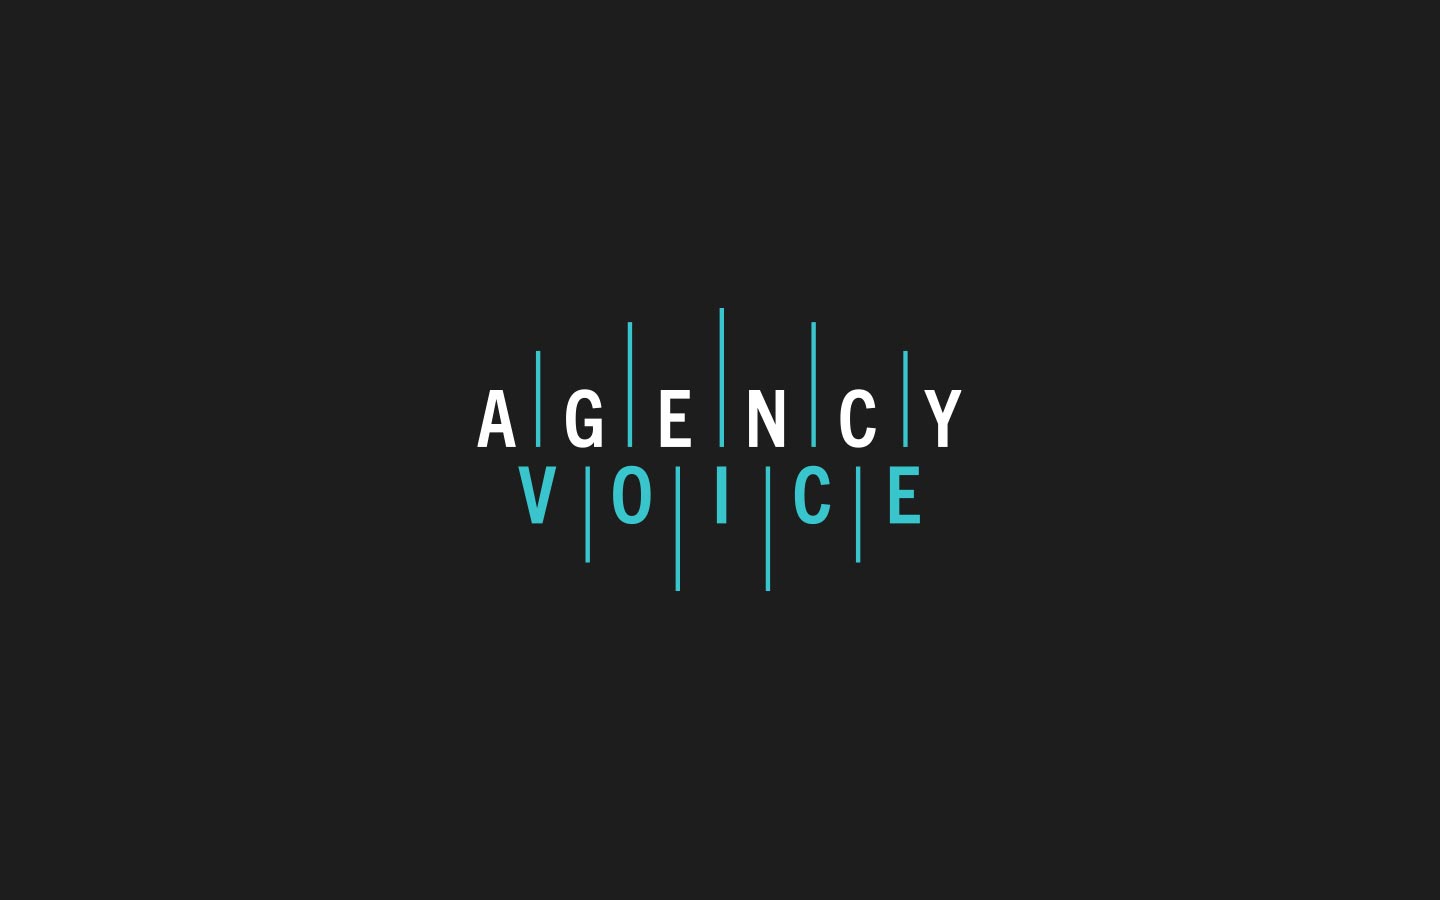 Agency voice logo